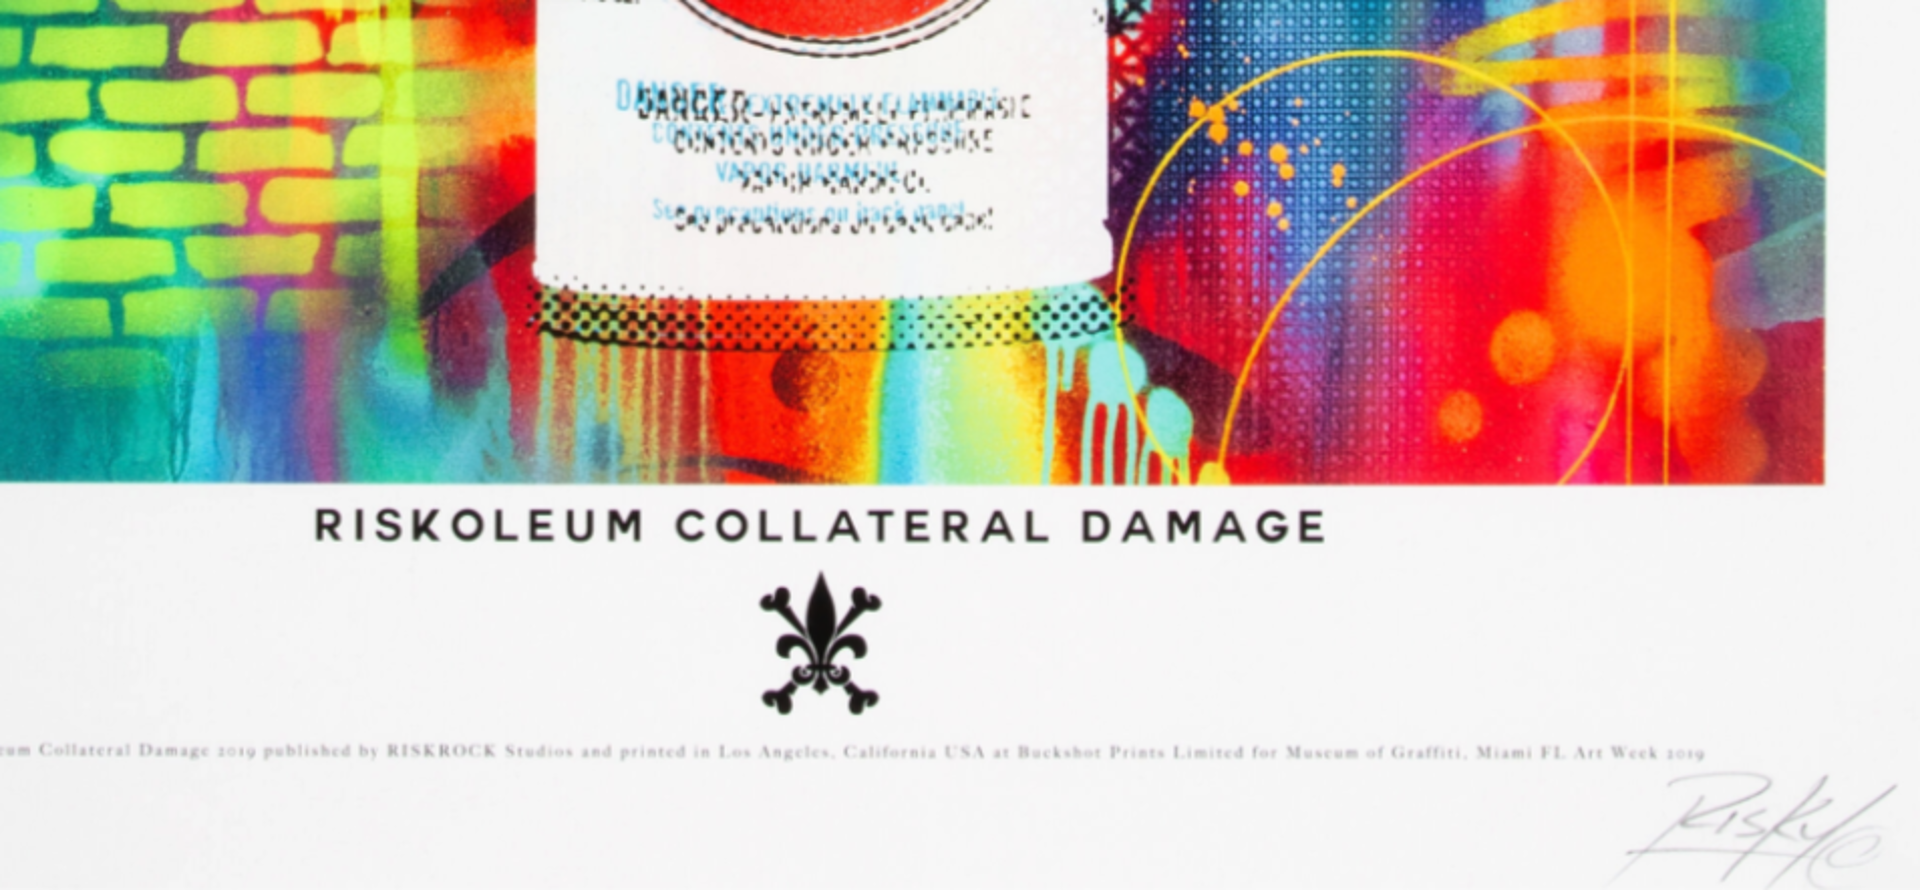 Riskoleum Collateral Damage (16/25) by Risk